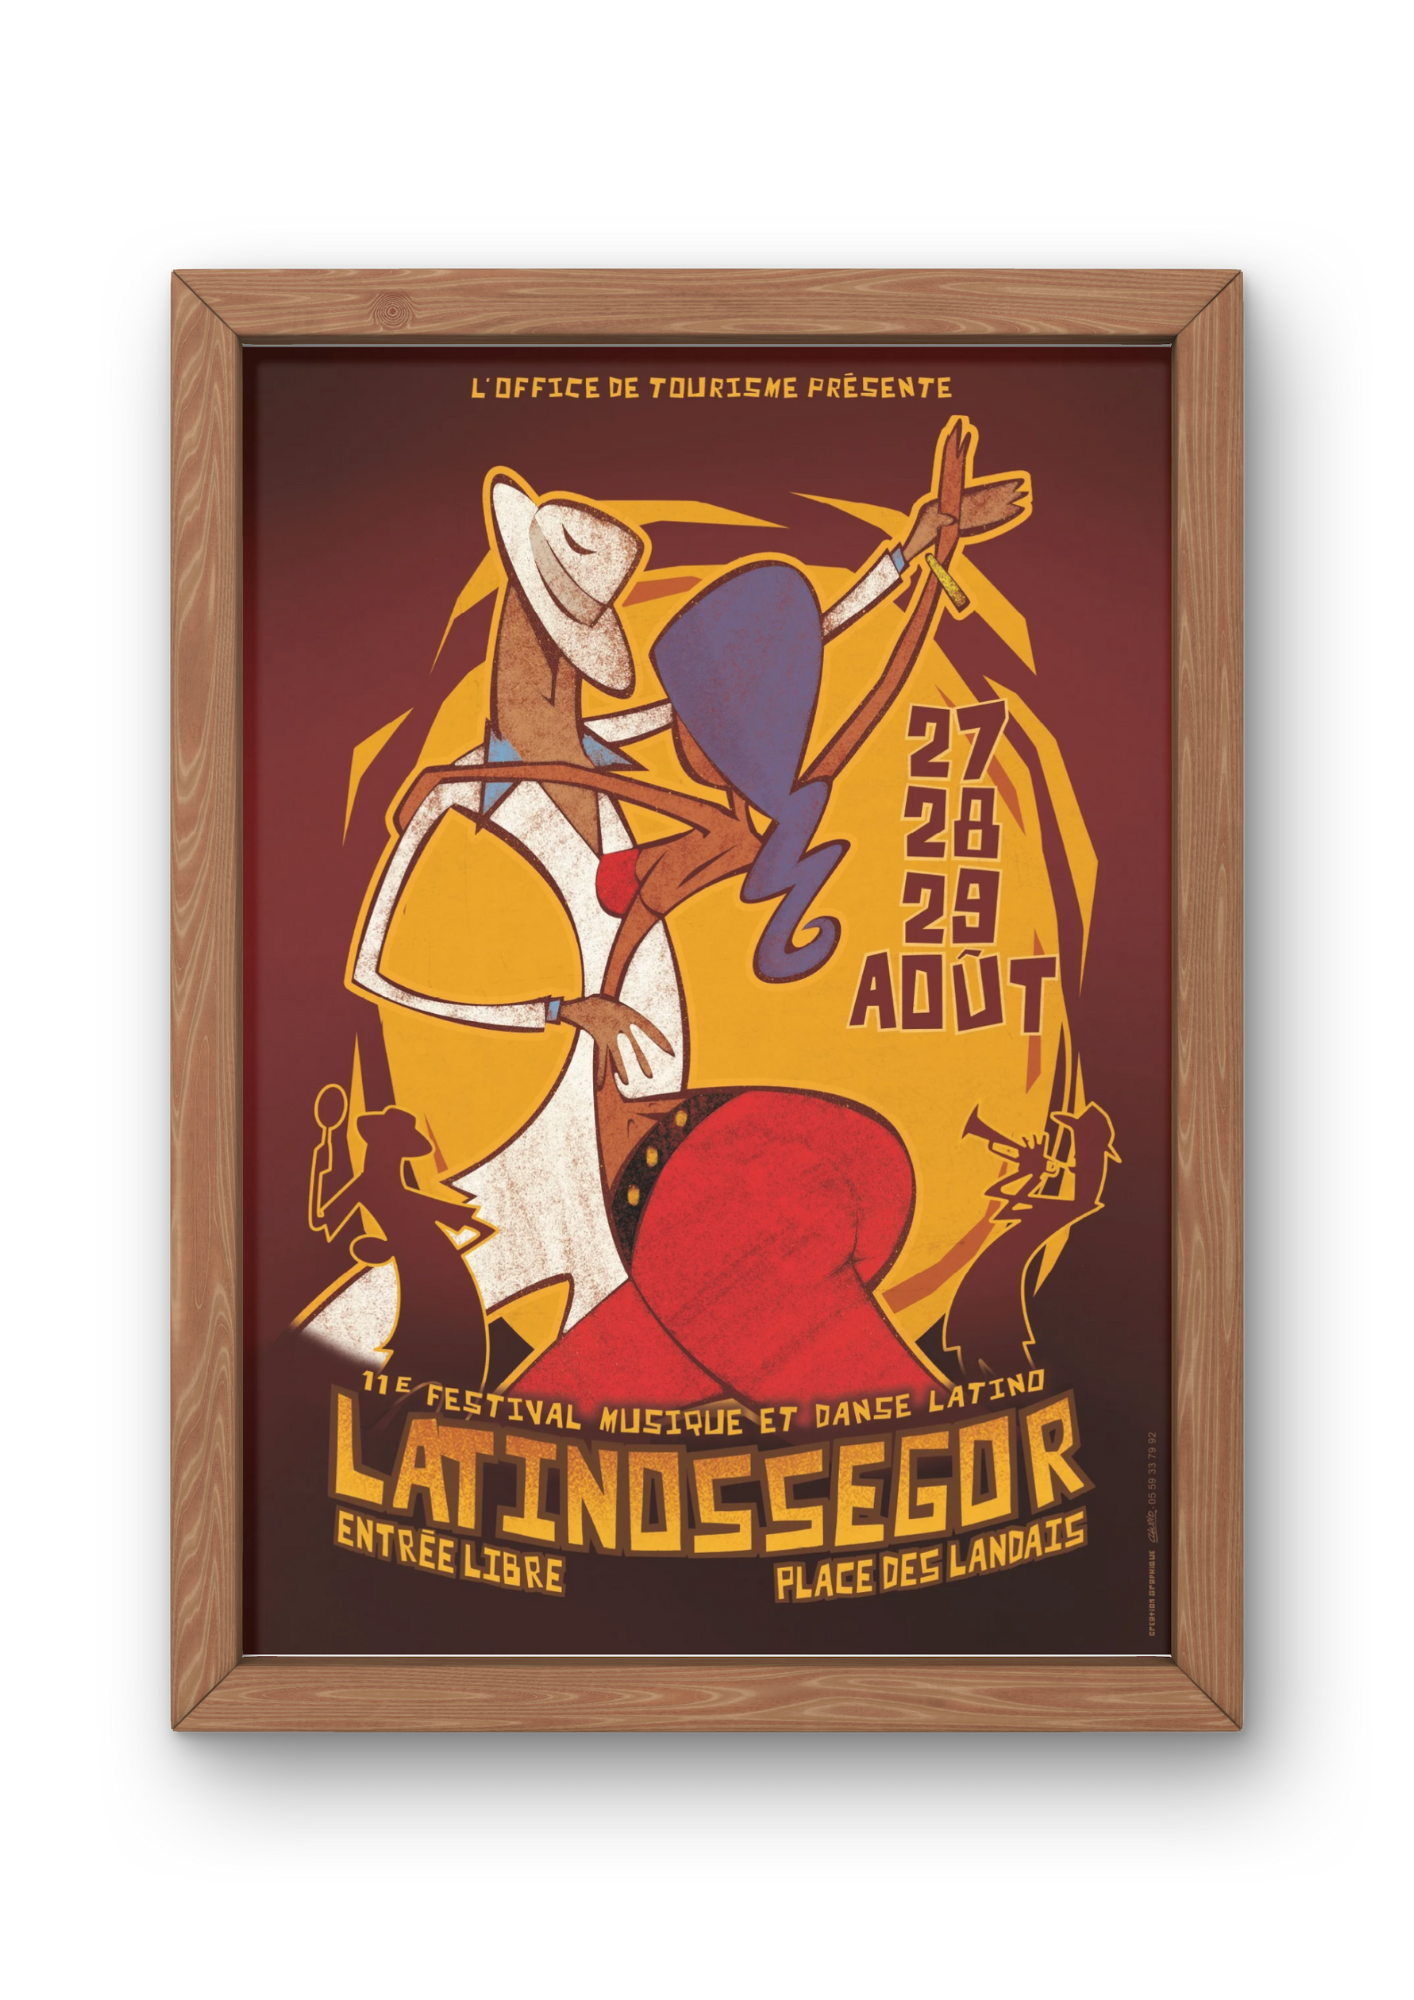 Affiche Hossegor festival Latinossegor (Édition 2011)